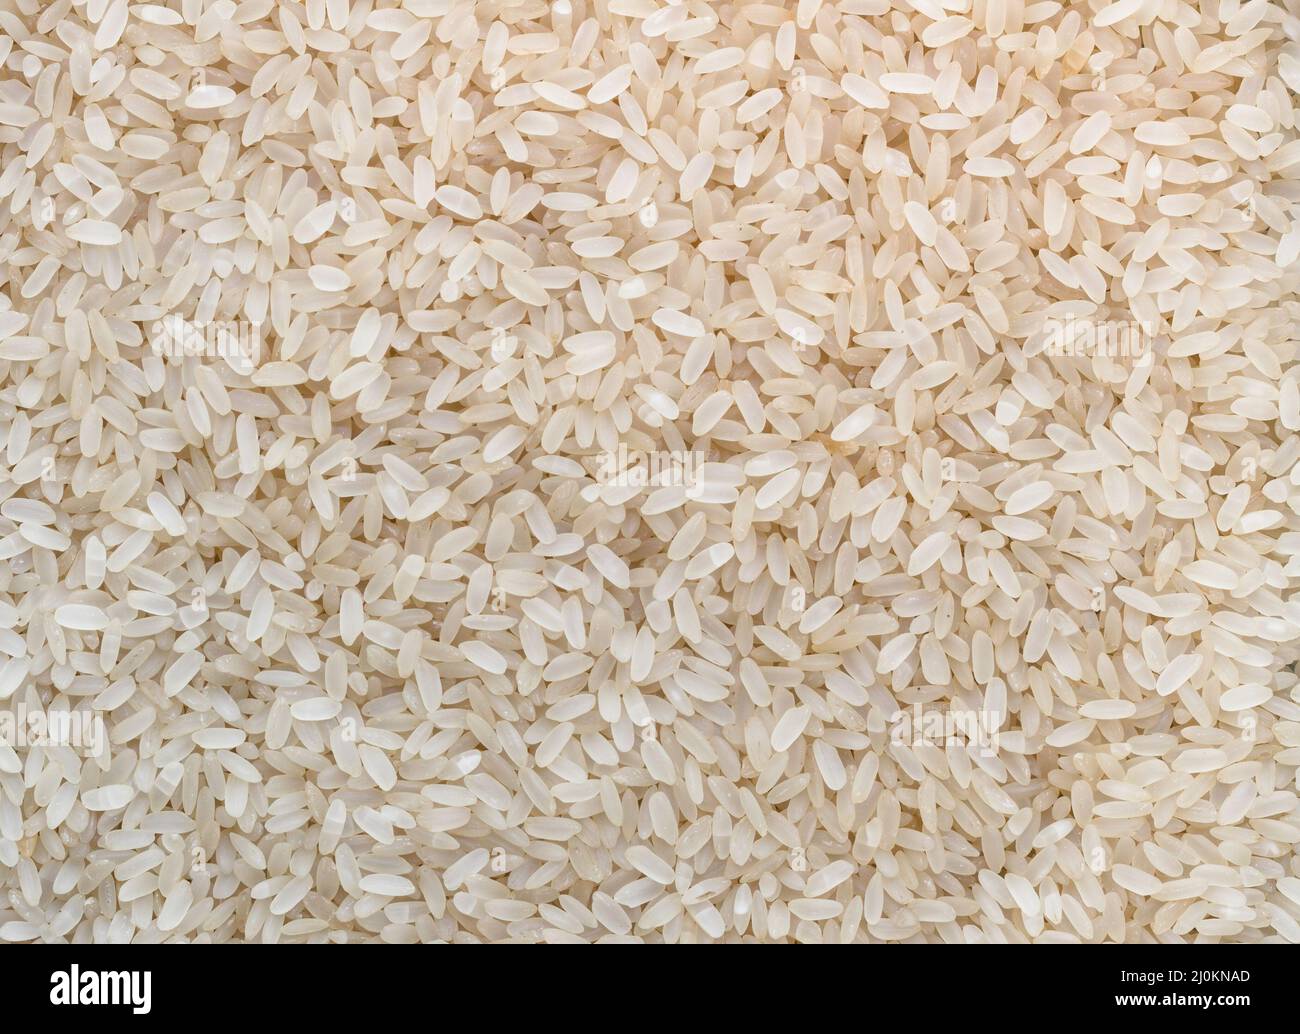 Uncooked rice background Stock Photo